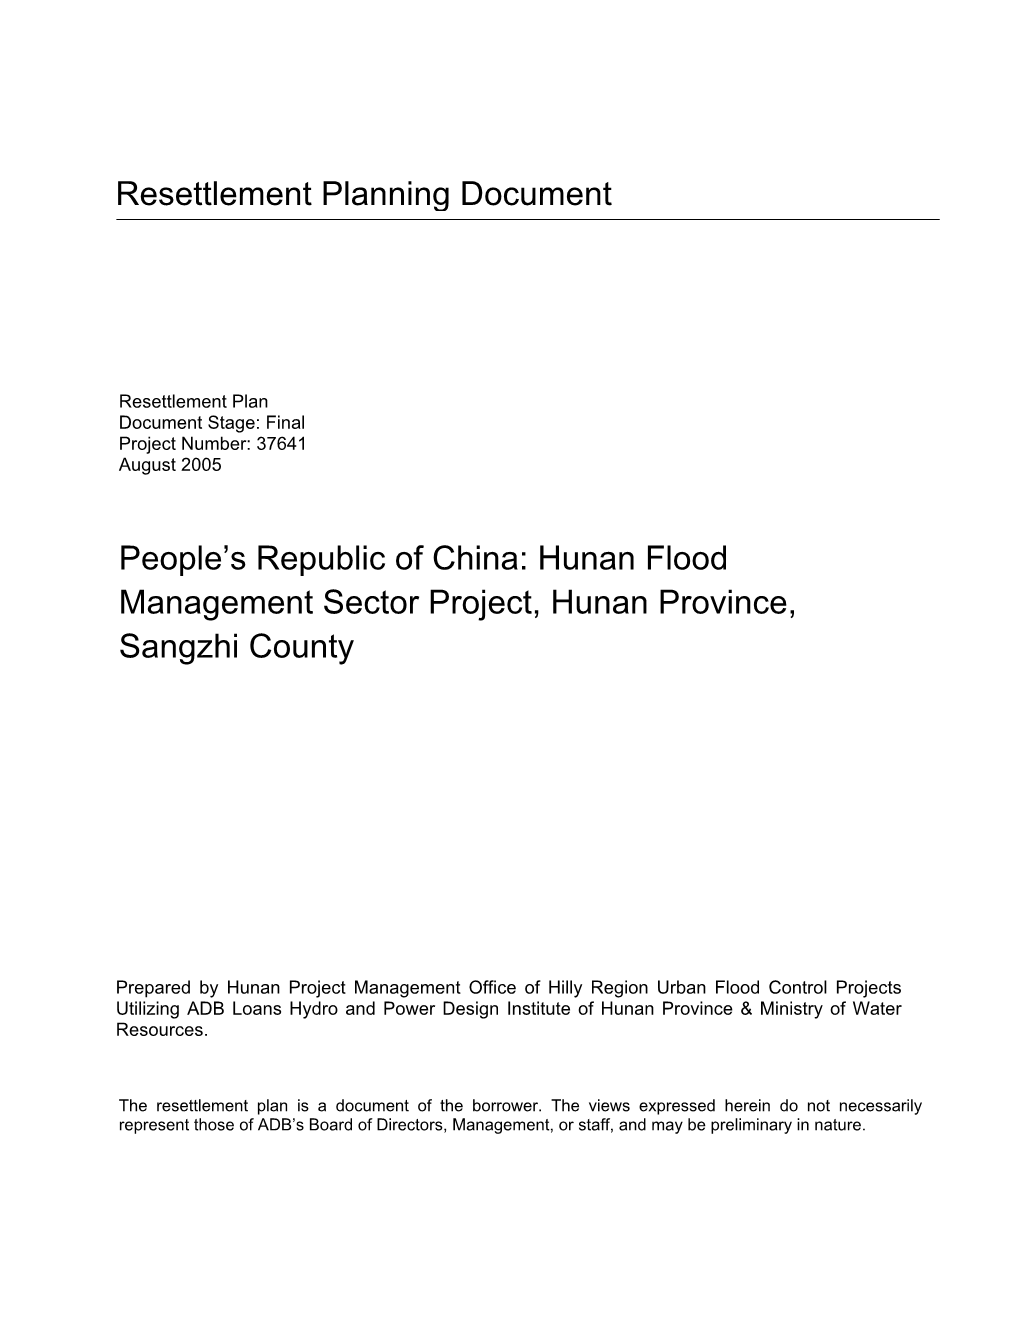 Hunan Flood Management Sector Project, Hunan Province, Sangzhi County